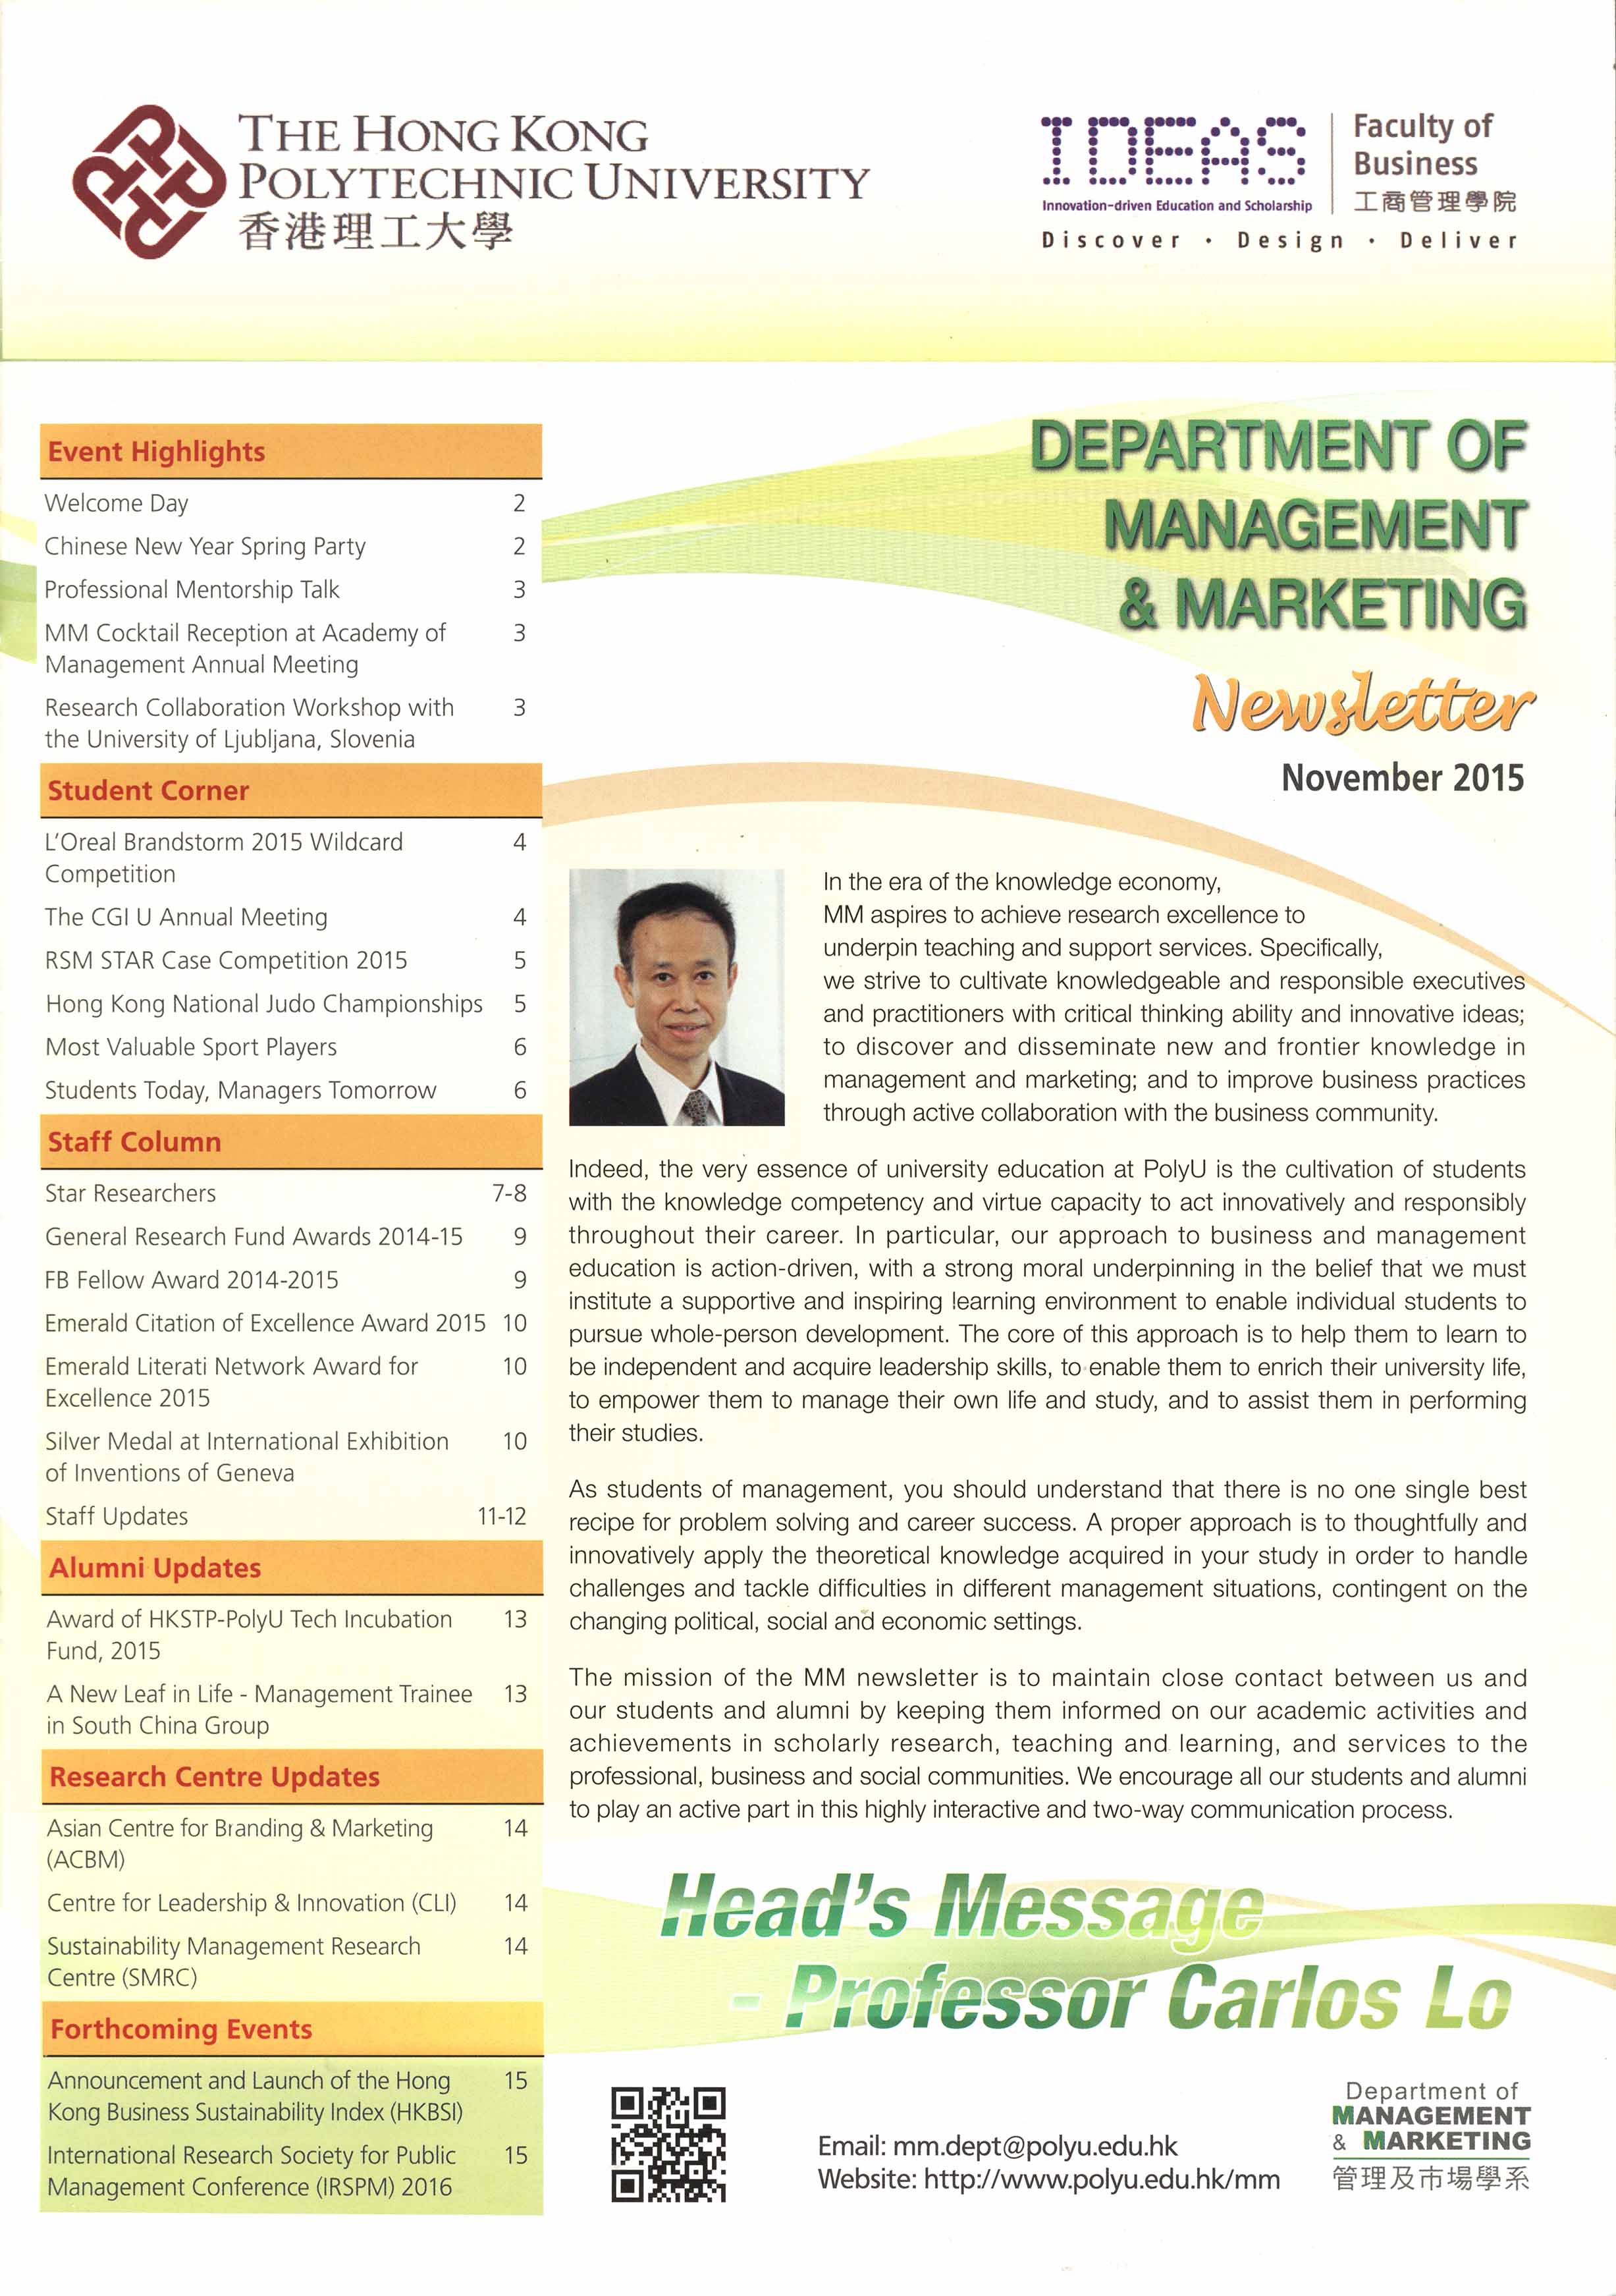 Hong Kong Polytechnic University. Department of Management and Marketing. Newsletter. November 2015